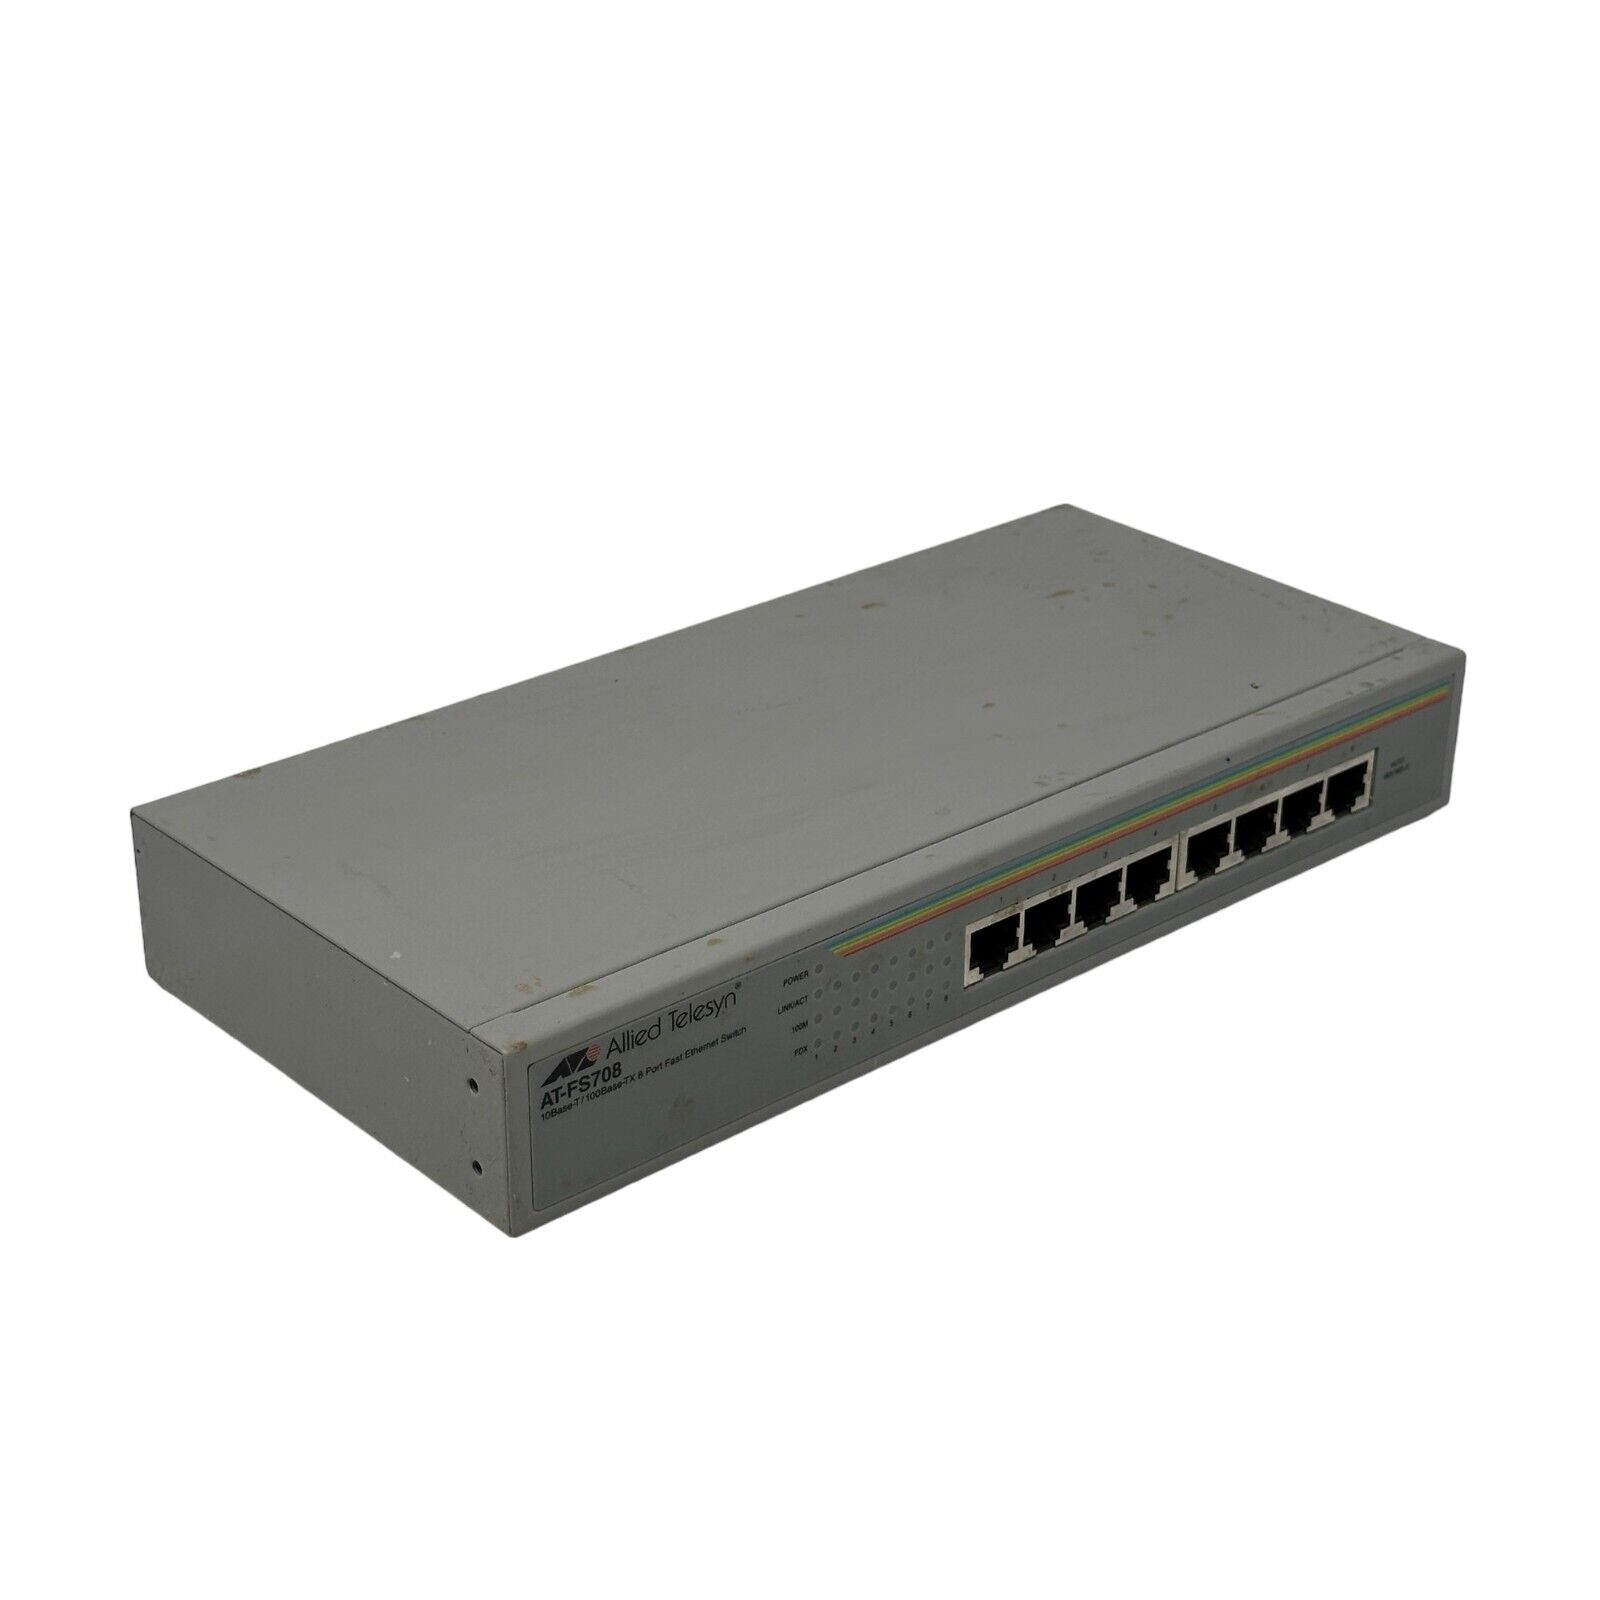 Allied Telesyn AT-FS708 10Base-T 100Base-TX 8 Port Ethernet Switch